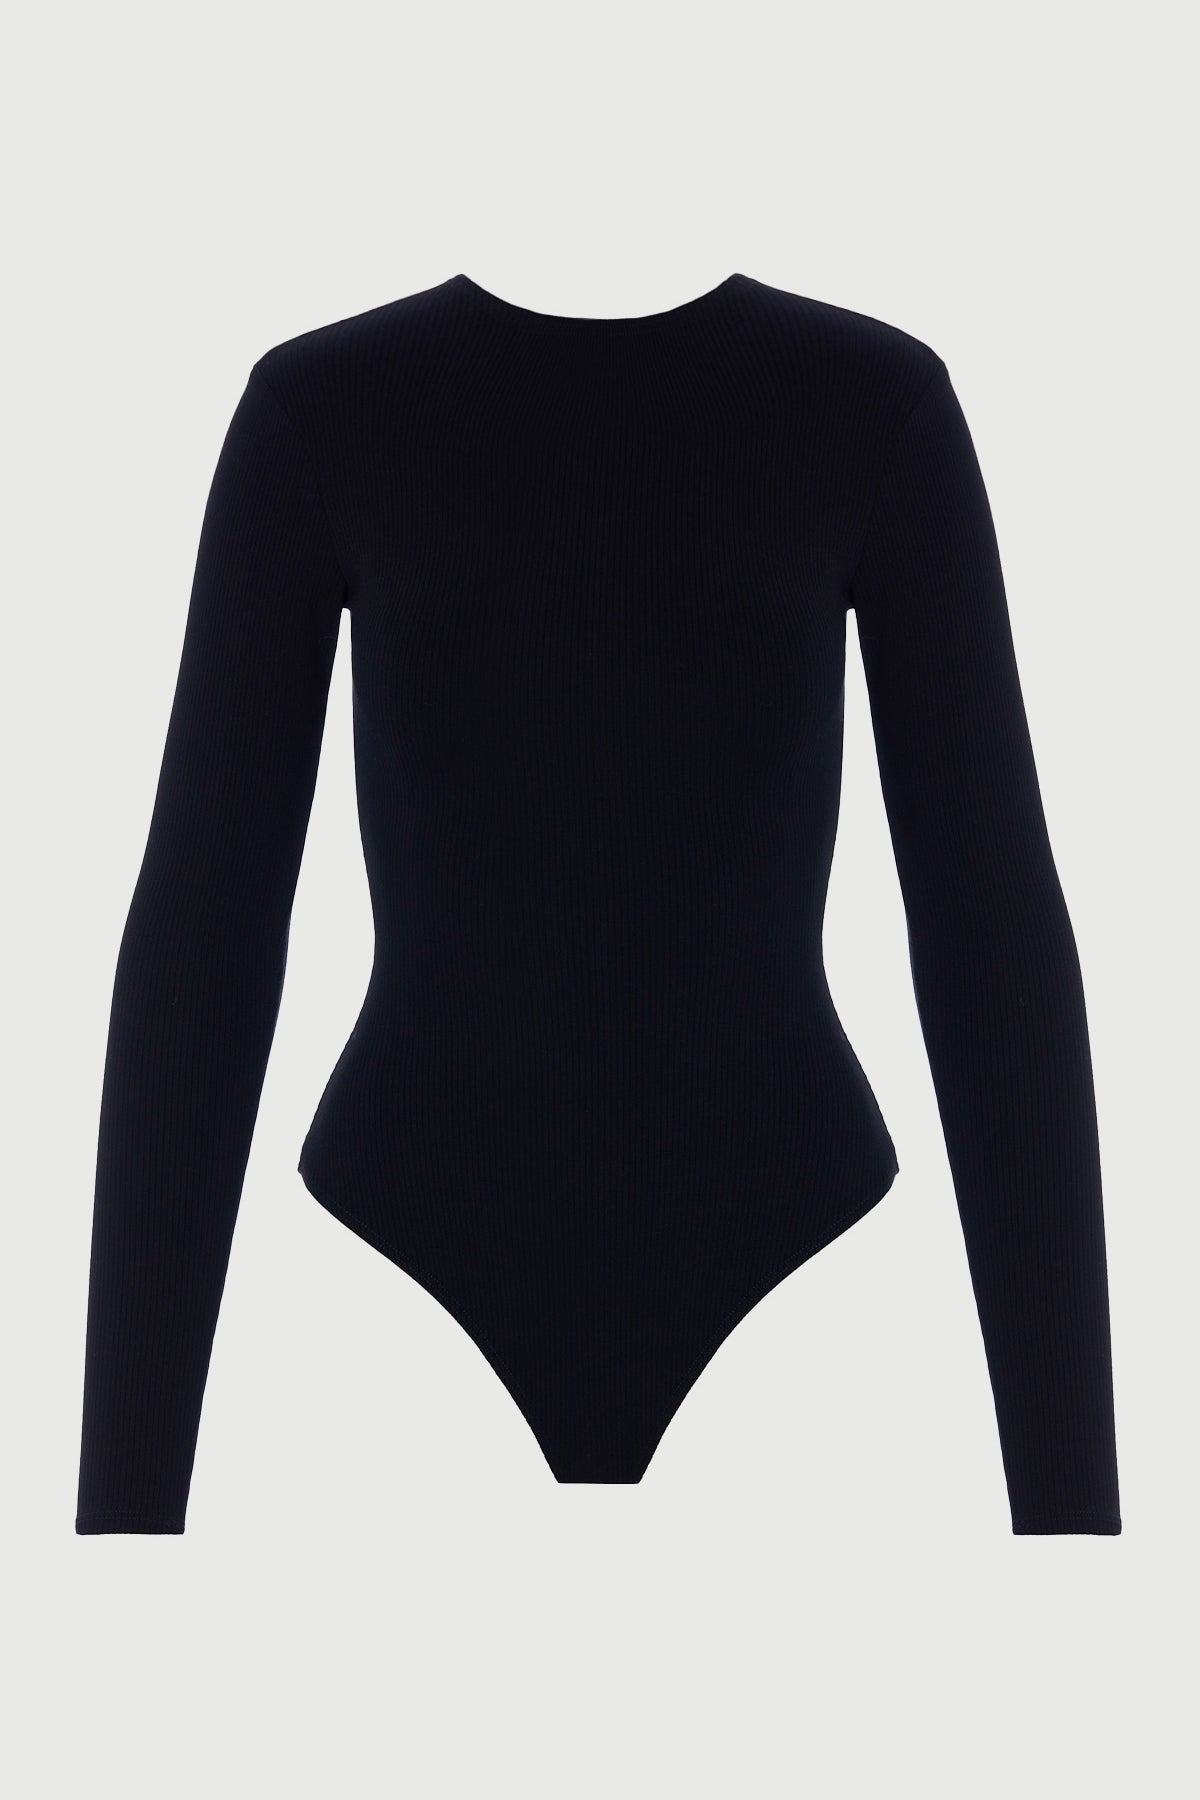 Snatched Goals Bodysuit - Women's Bodysuits